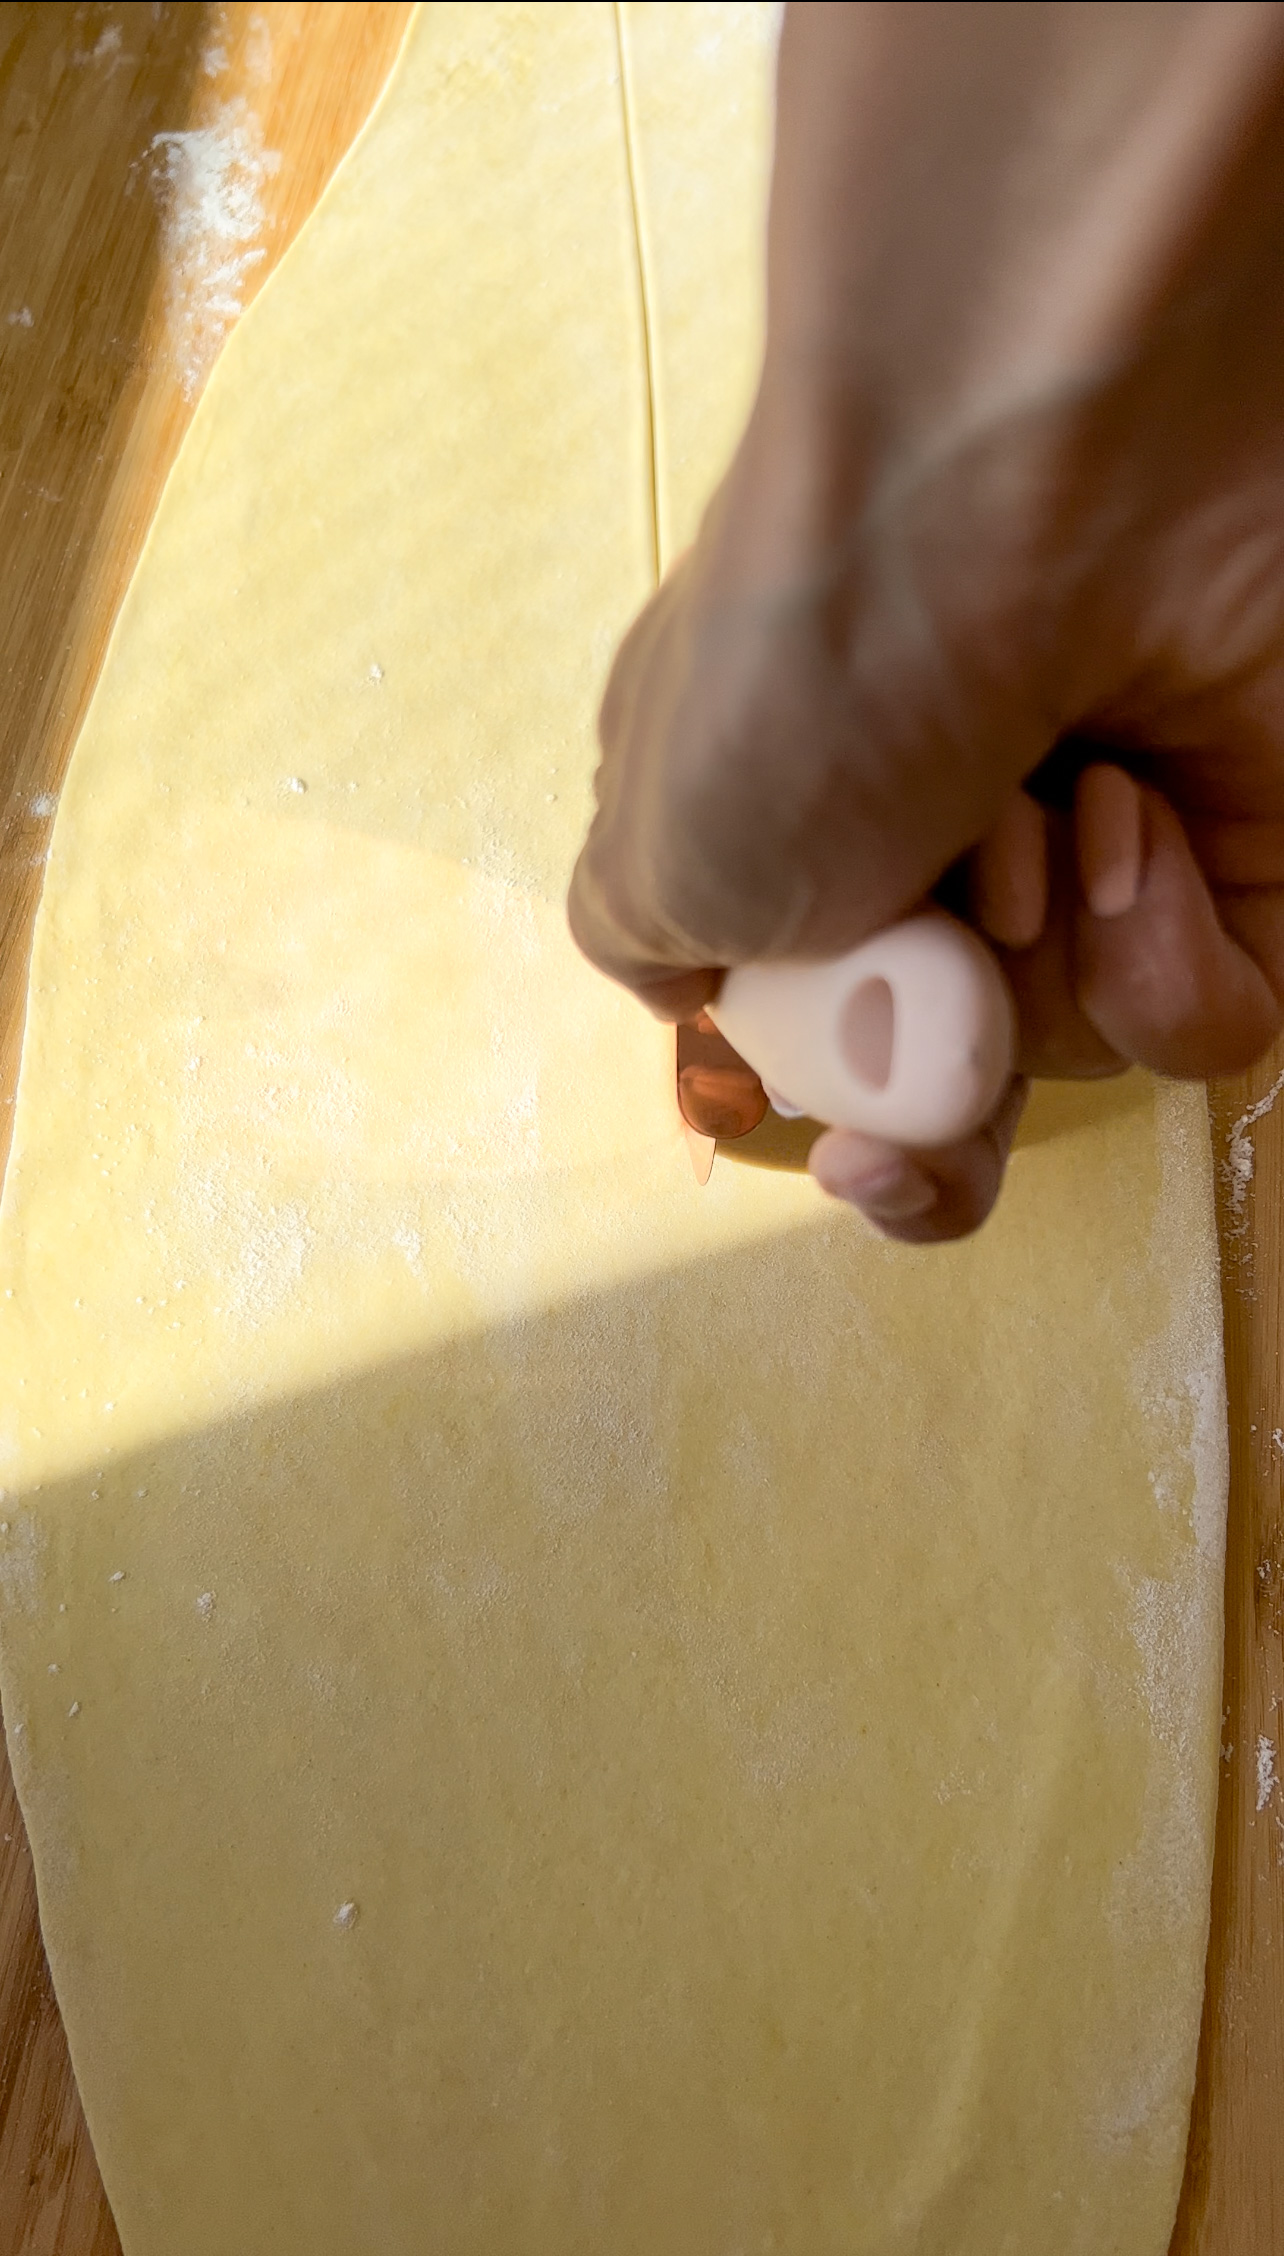 pizza cutter cutting into fresh pasta dough